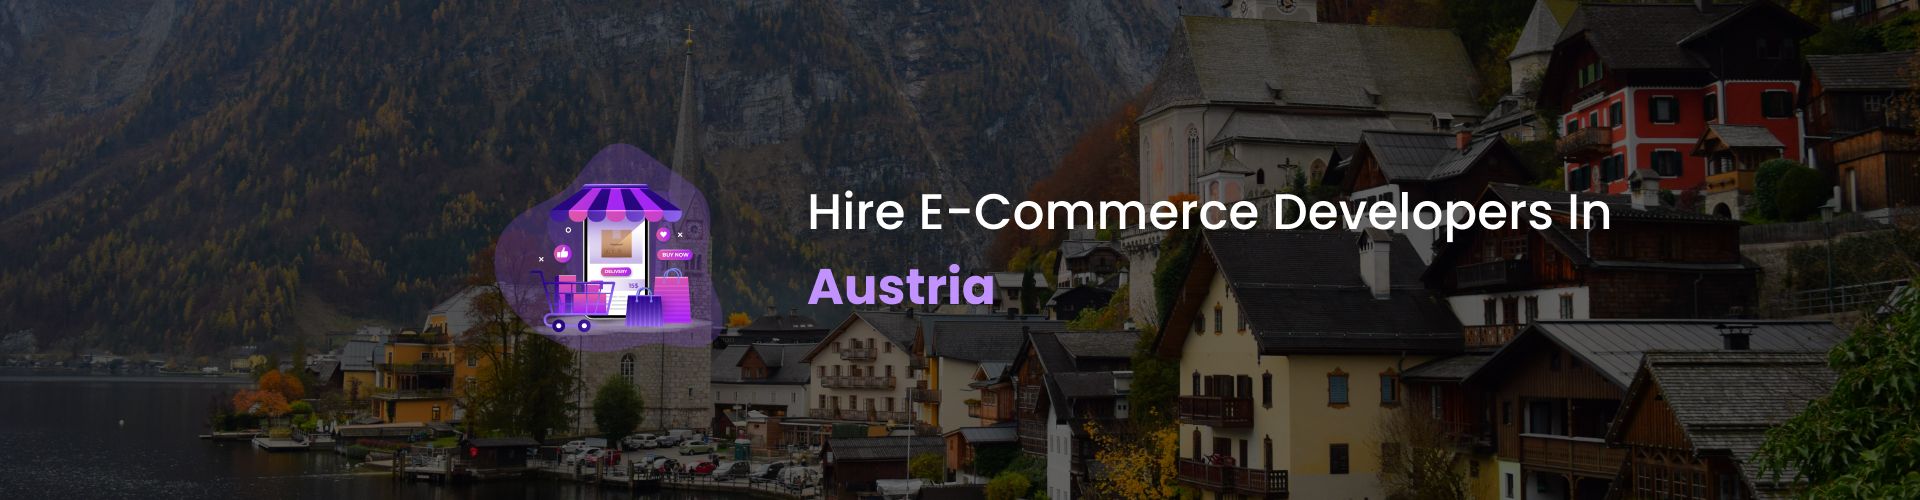 ecommerce developers austria